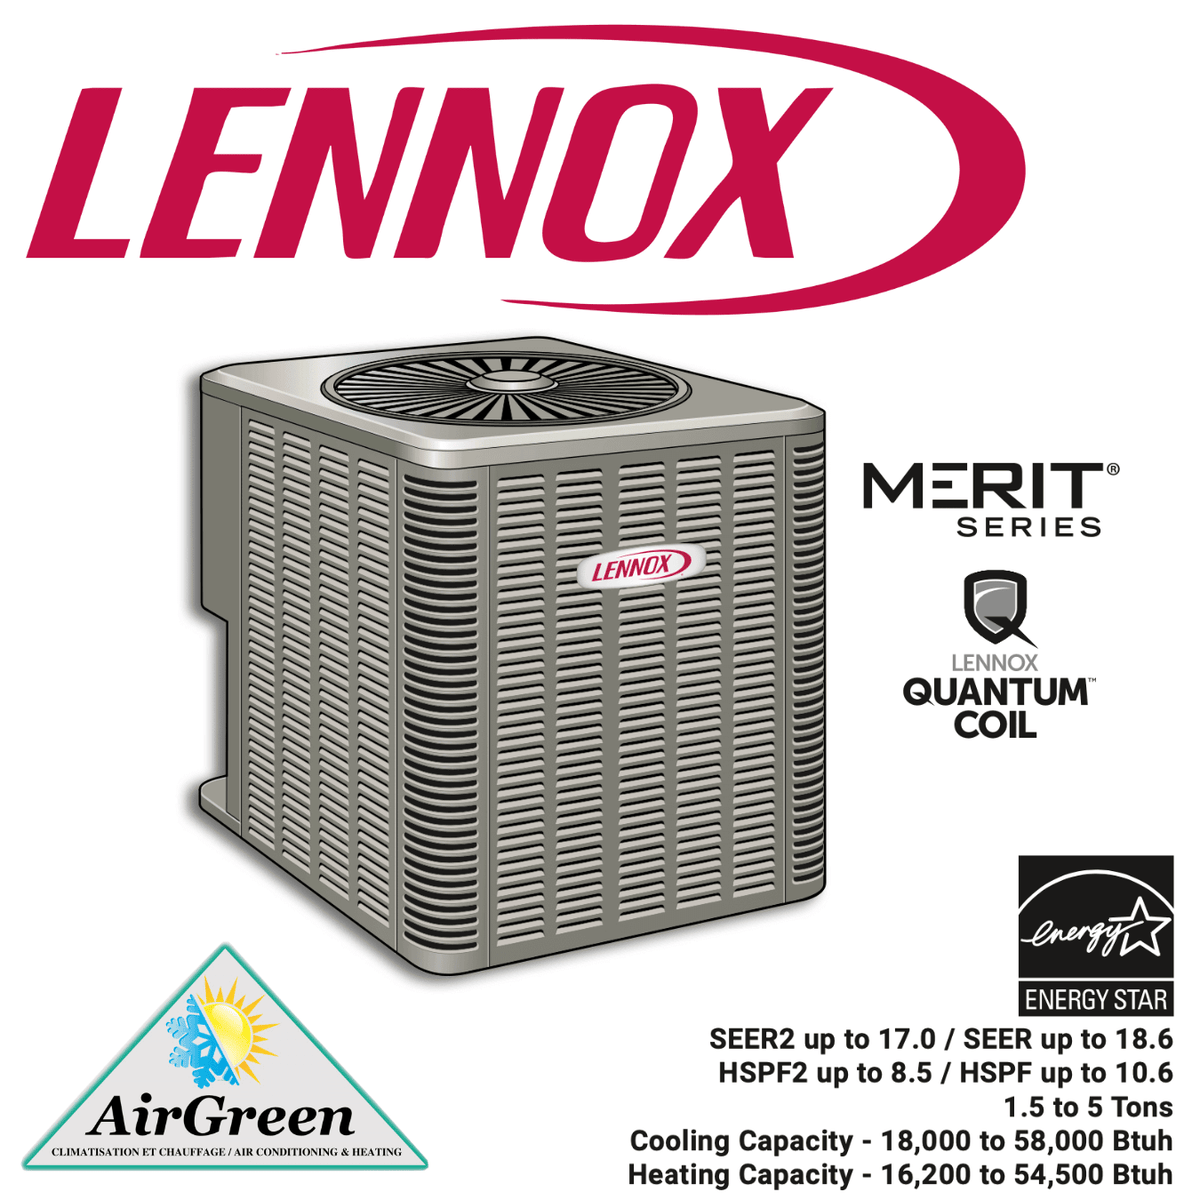 Thermopompe Centrale LENNOX MERIT ML17XP1 3 Tonnes spec sheet with relevant information